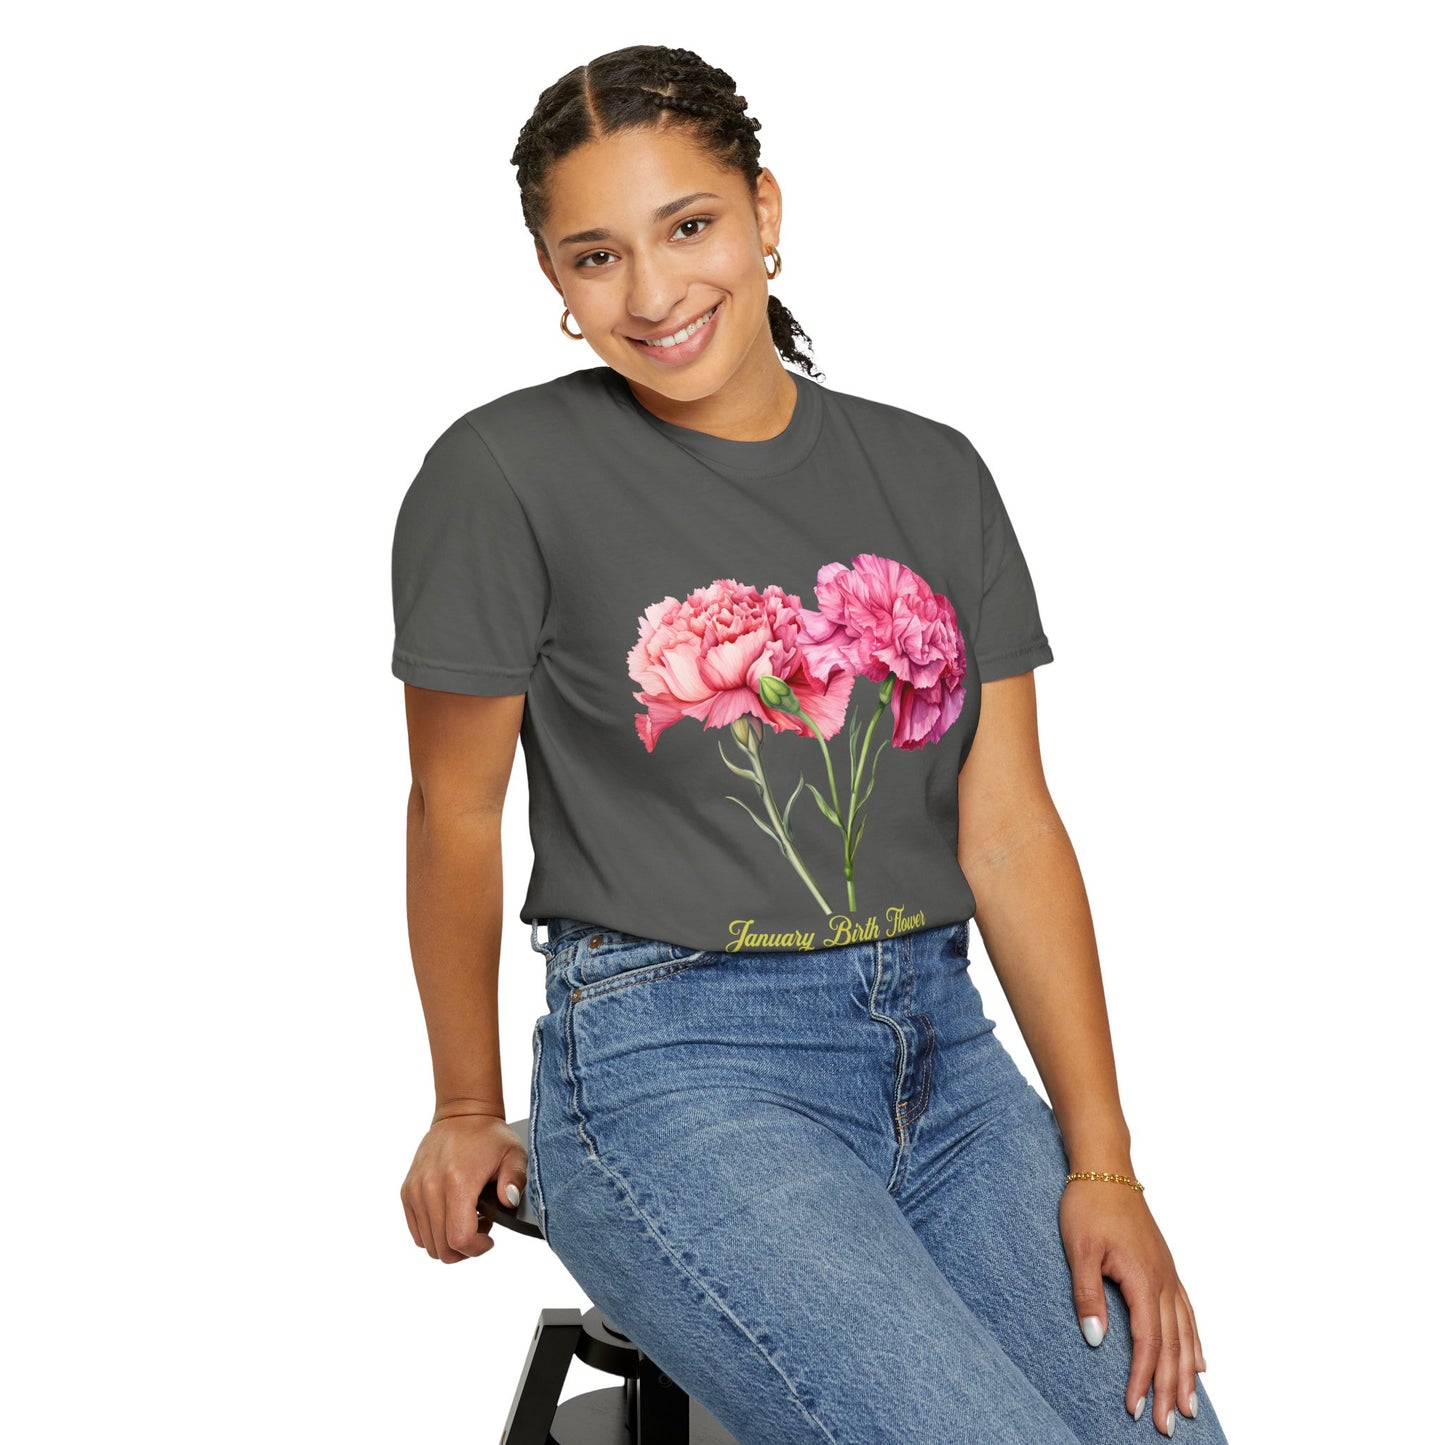 January Birth Flower "Daffodil" (For Print on Dark Fabric) - Unisex Garment-Dyed T-shirt